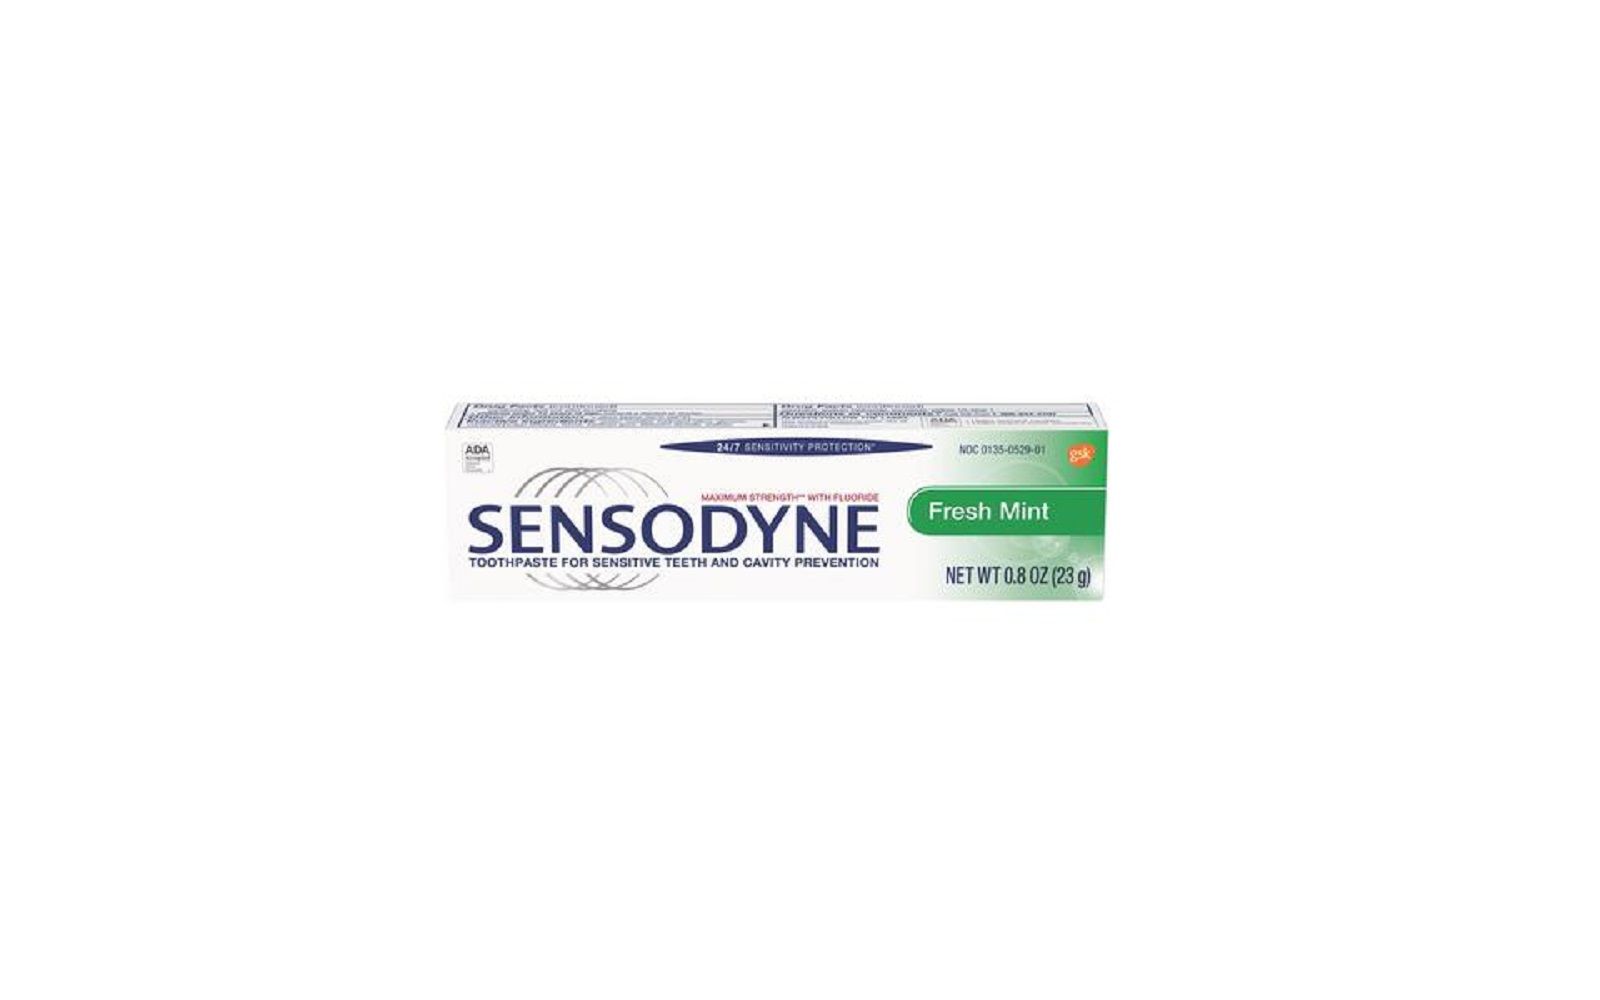 Sensodyne® fresh mint toothpaste – 0. 8 oz tube, 36/pkg